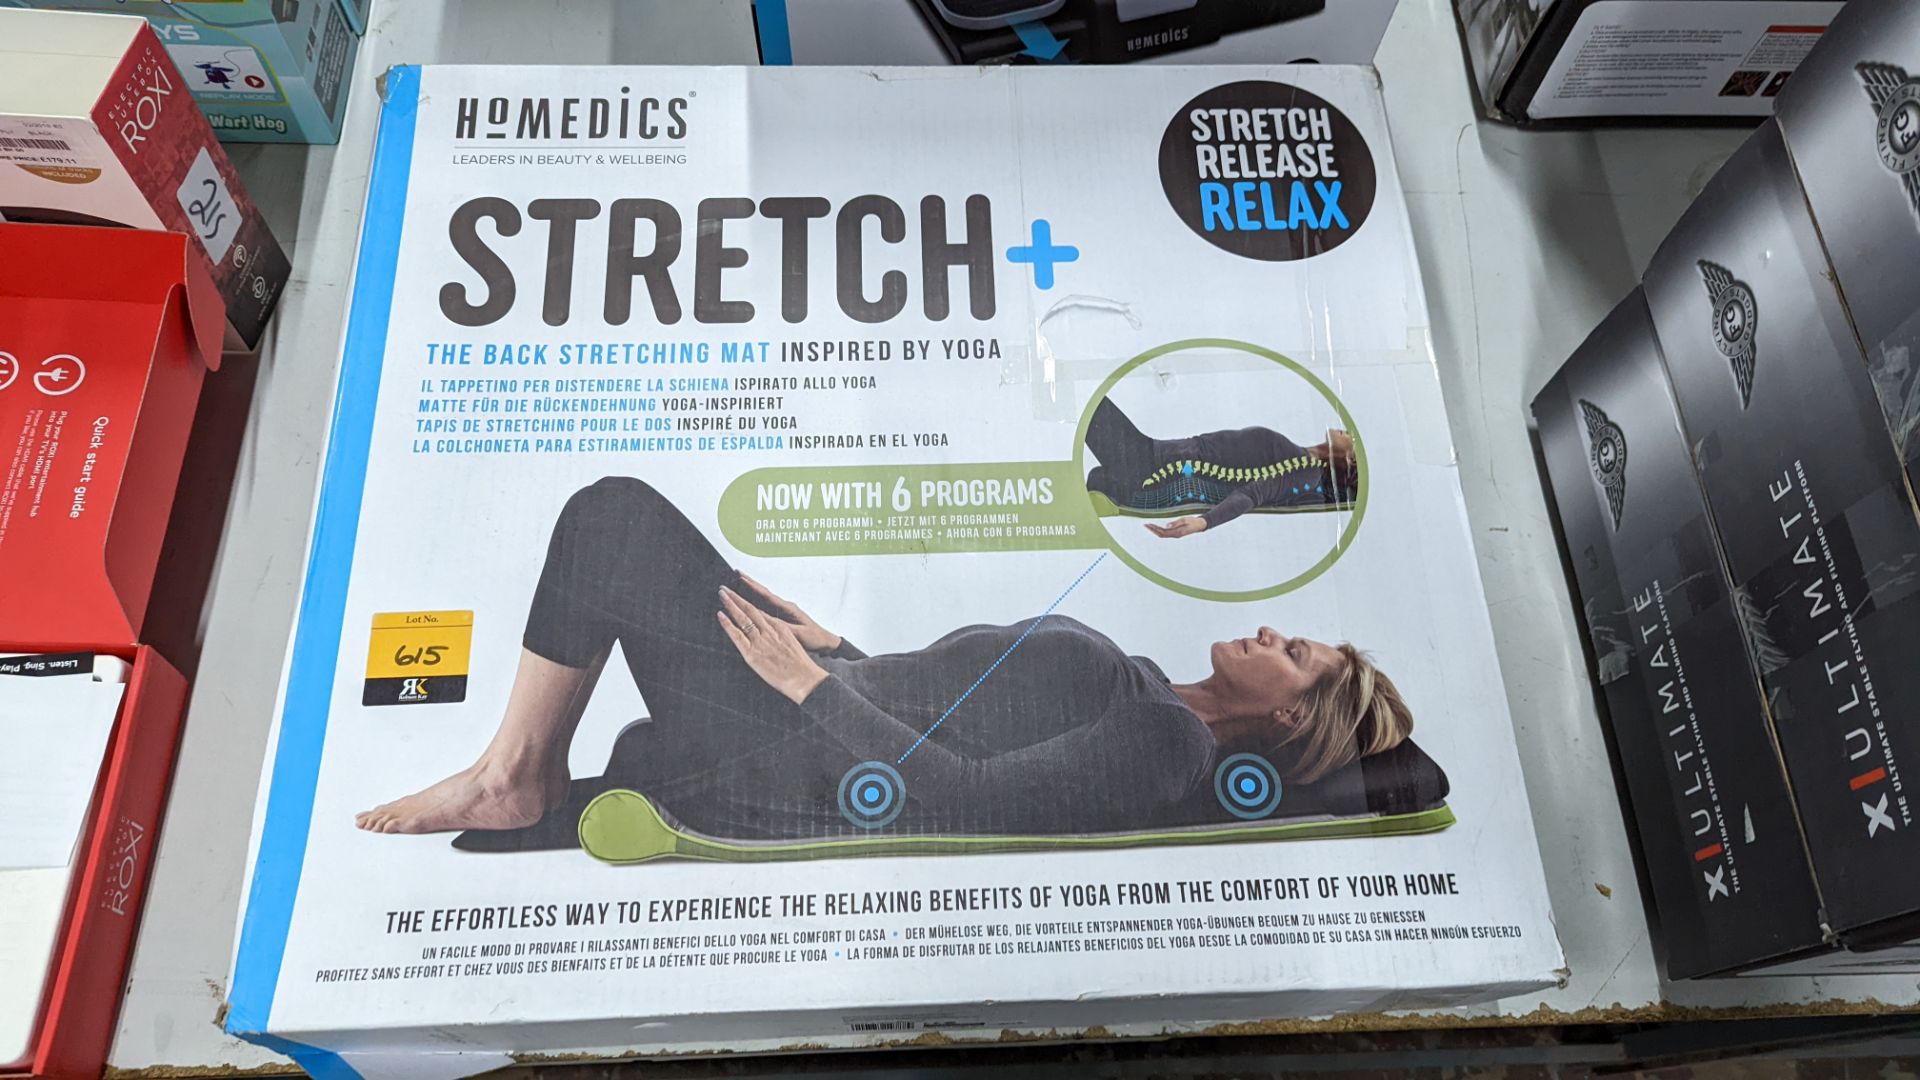 Homedics Stretch+ back stretching mat - Image 3 of 4